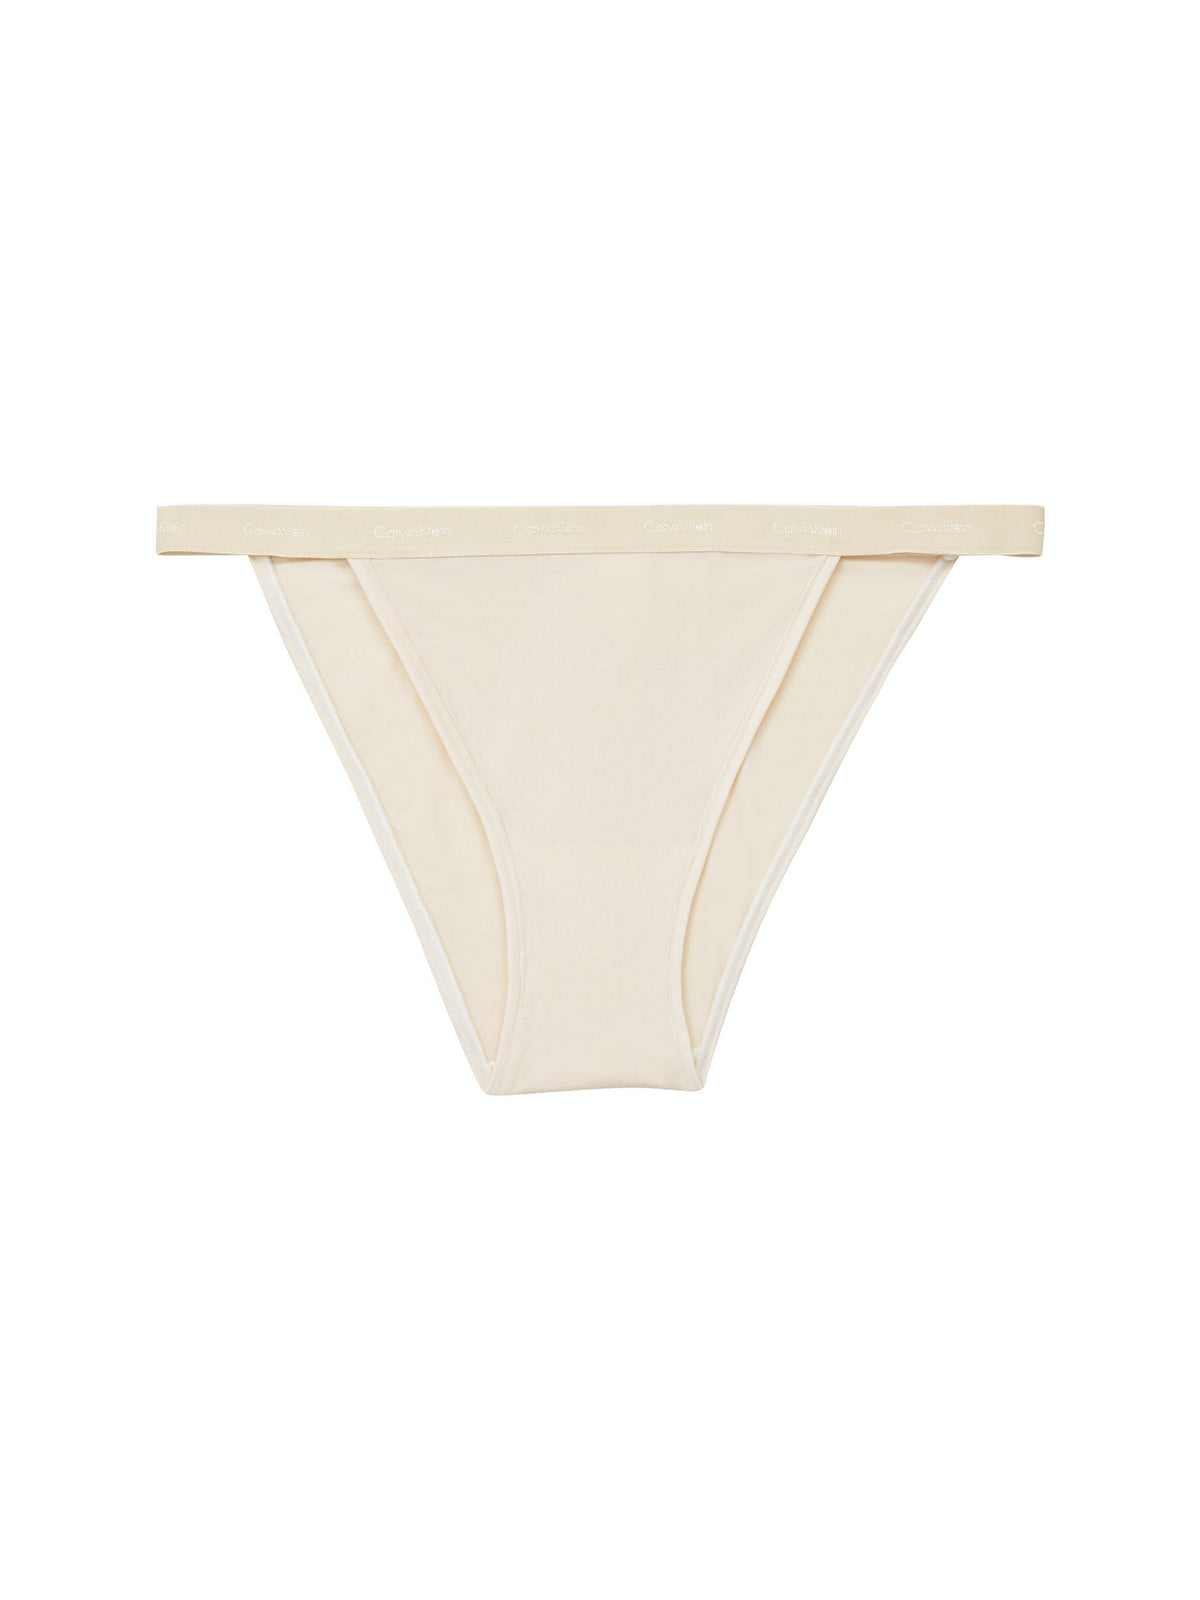 Form To Body Tanga Brief - Calvin Klein - Splash Swimwear  - calvin klein, May22, new accessories, new arrivals - Splash Swimwear 